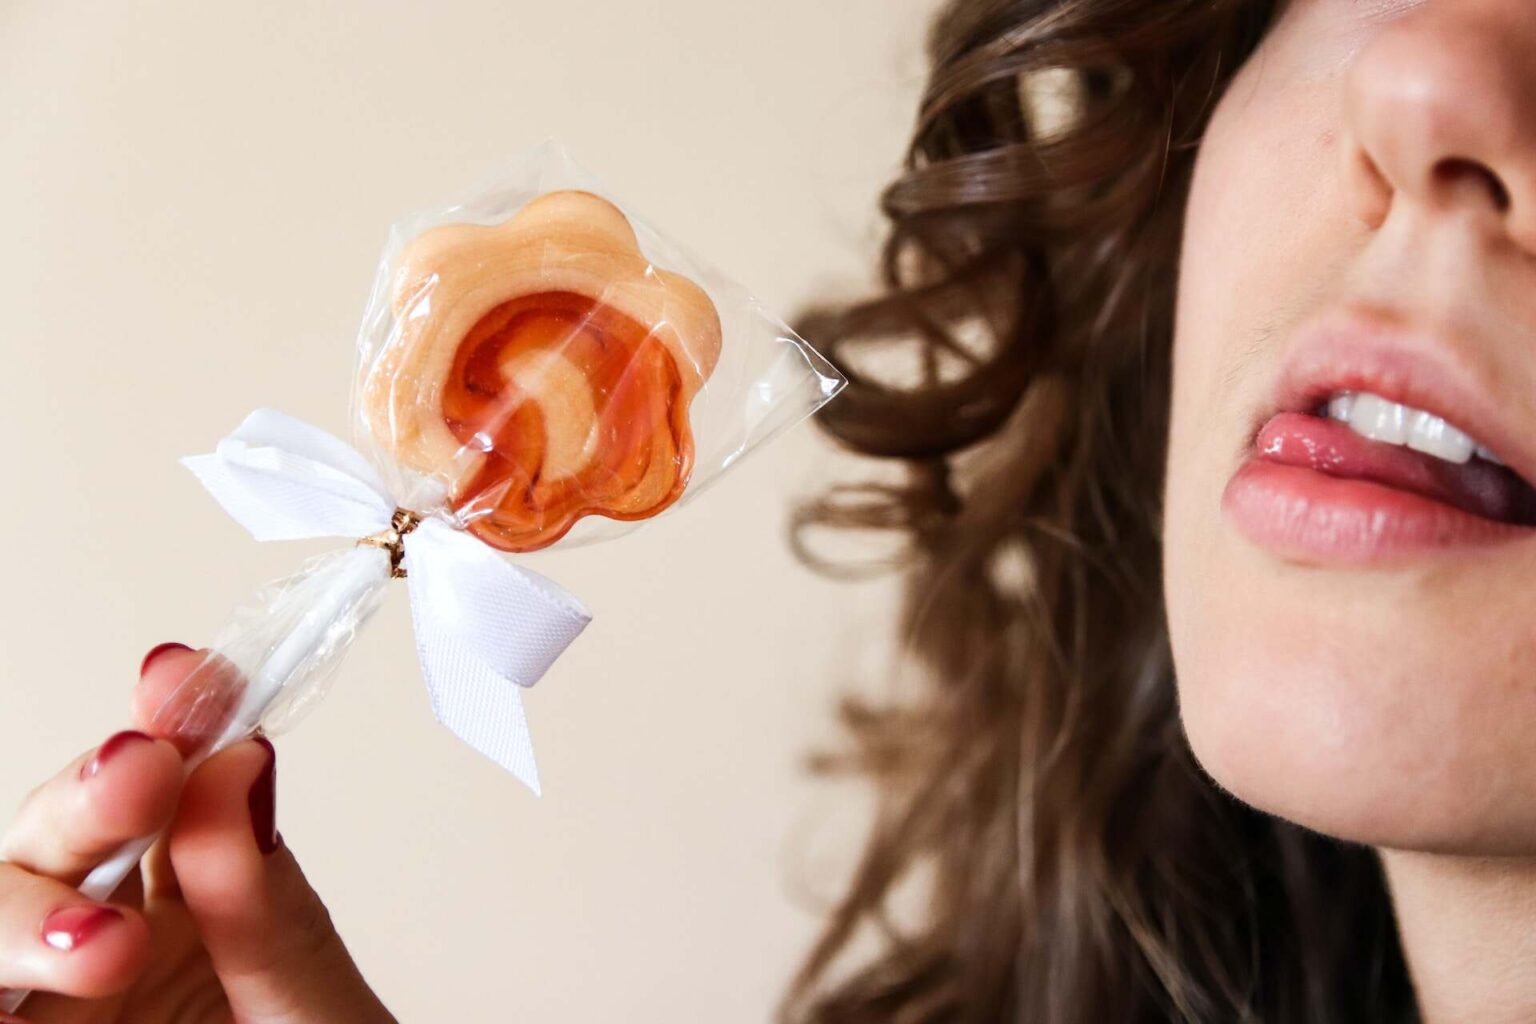 Woman licks lips, hoping rose-shaped lollipop.